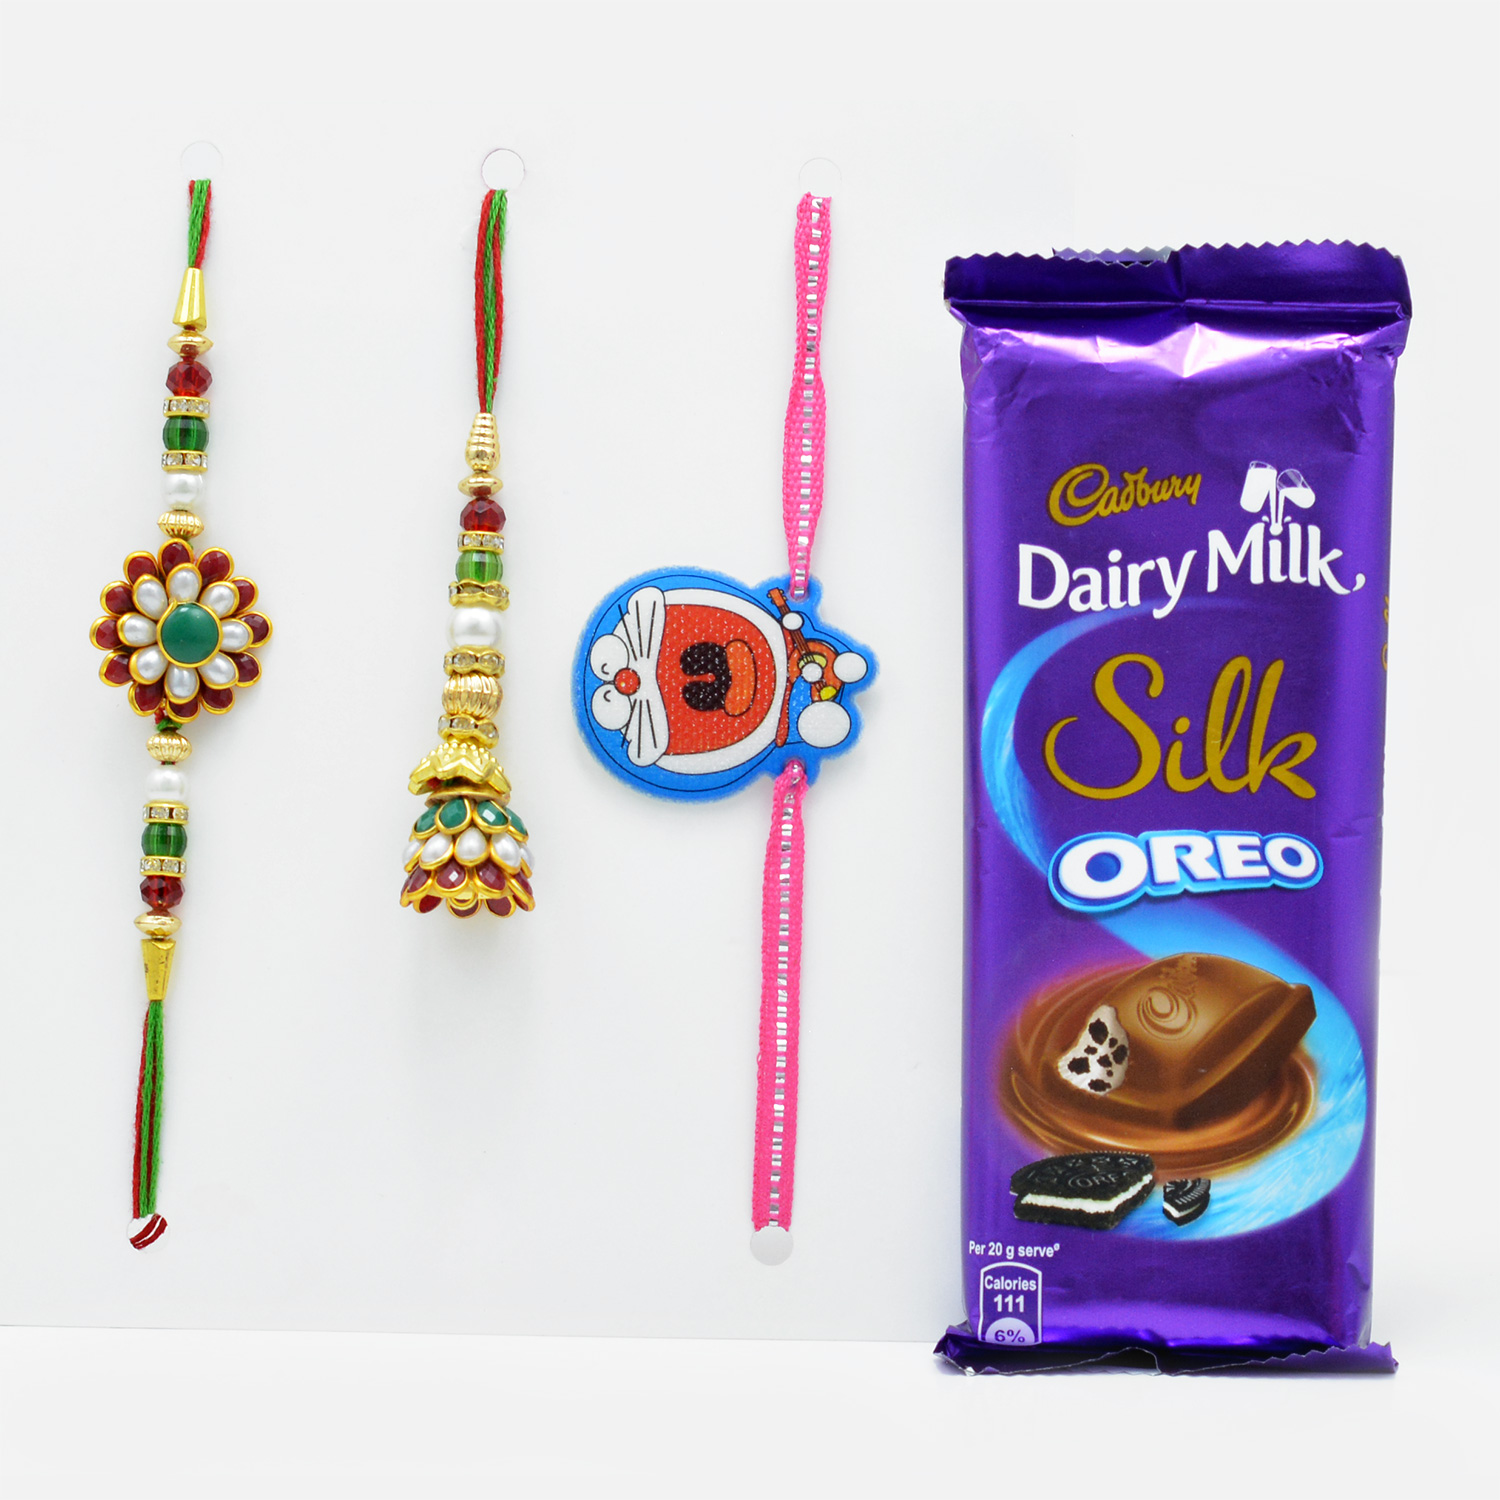 Elegant Rakhi Set of 3 for Family with Premium Cadbury Dairy Milk Silk Oreo